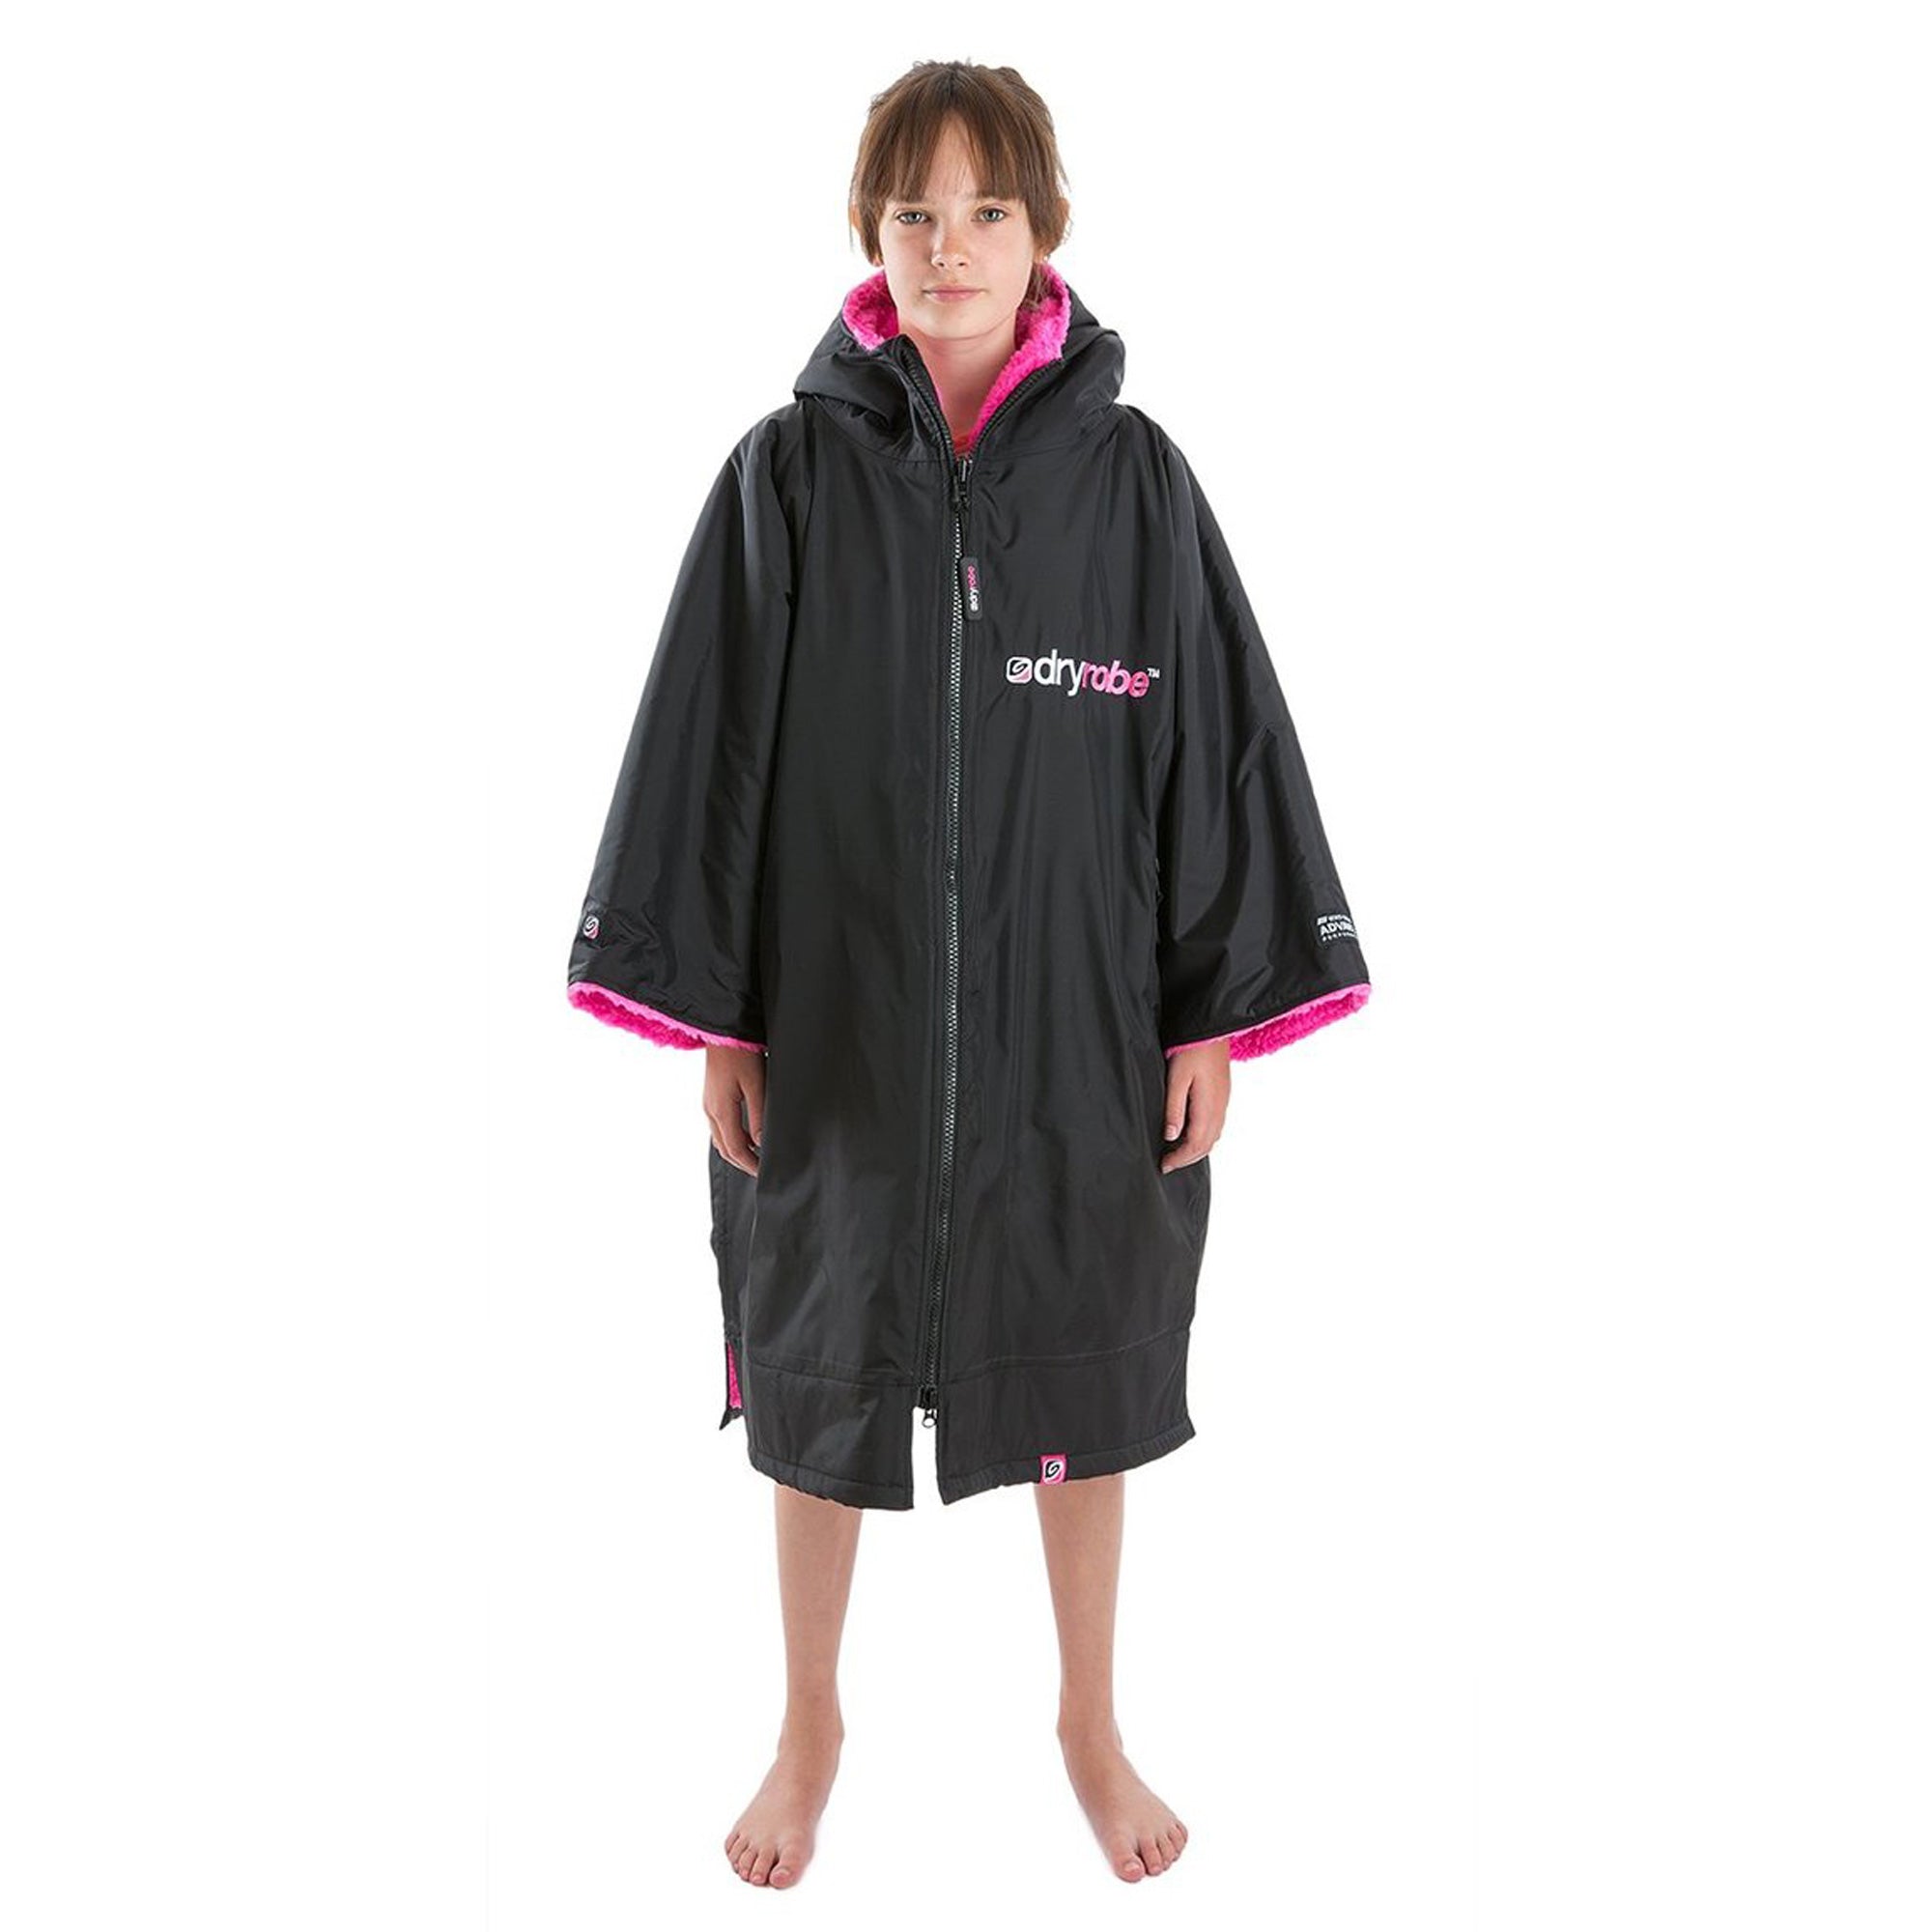 Dryrobe Advance Kids Short Sleeve - Black & Pink